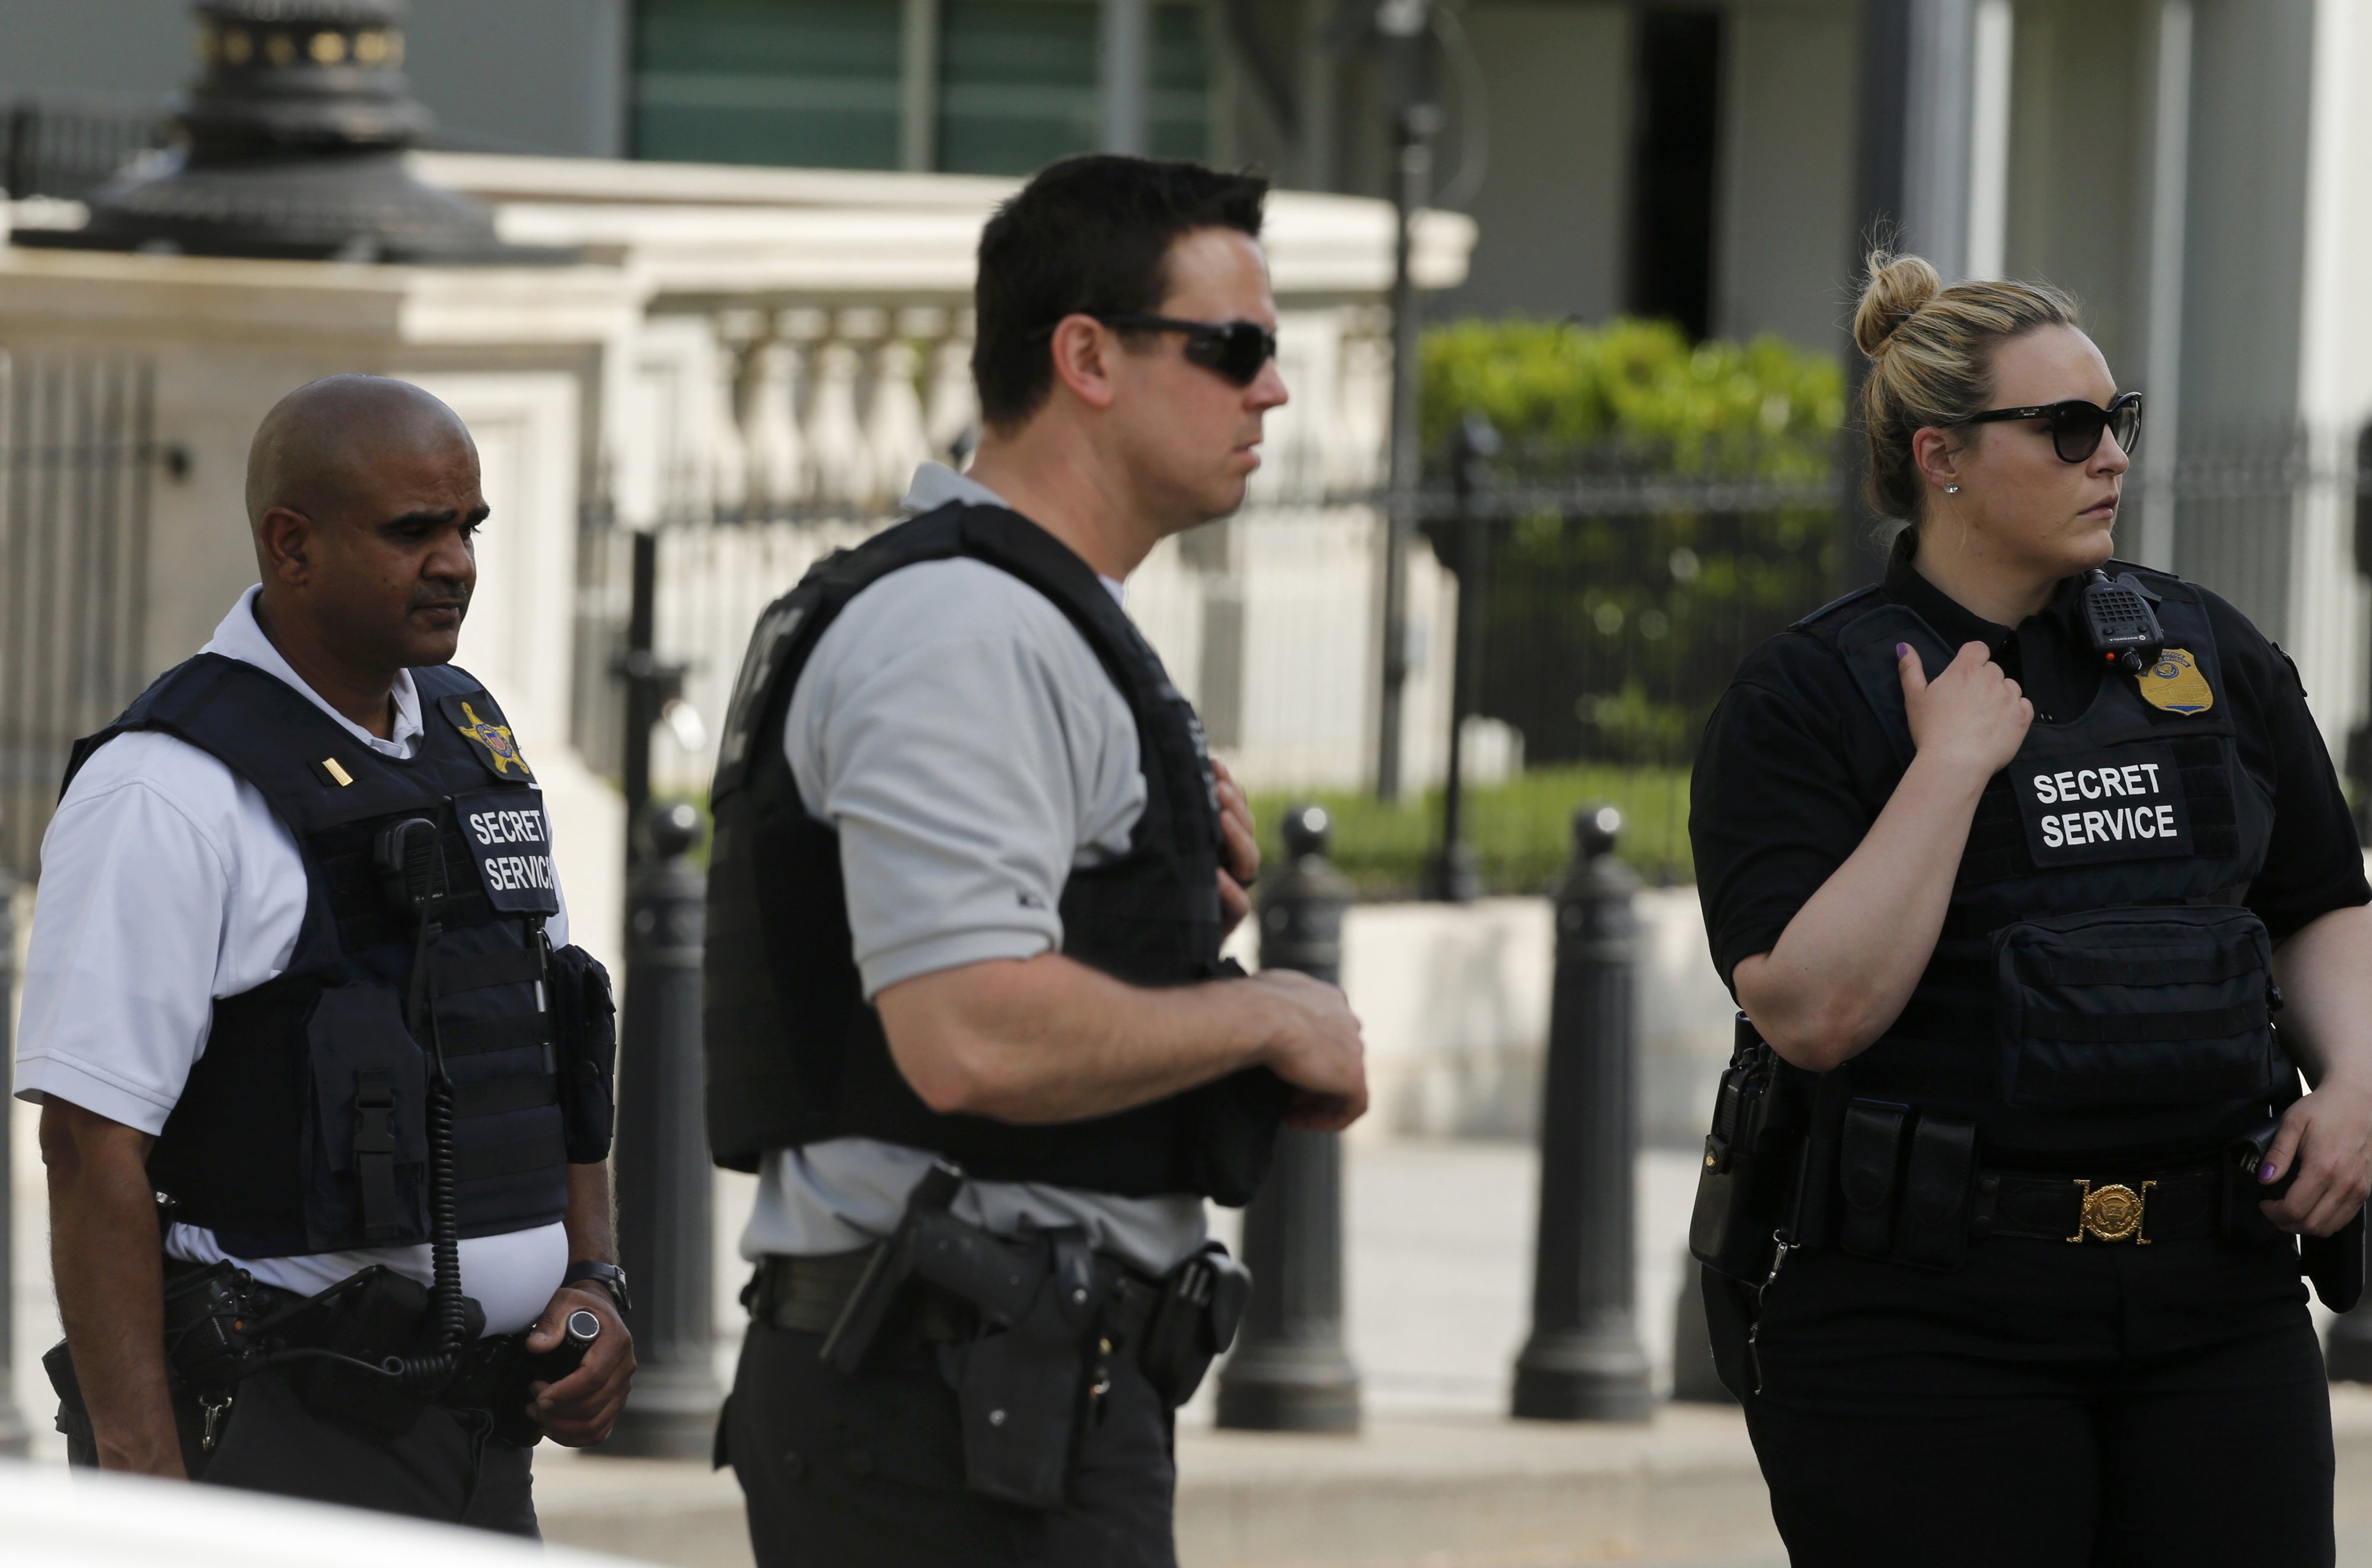 U.S. Secret Service shoots armed man near White House - CBS News